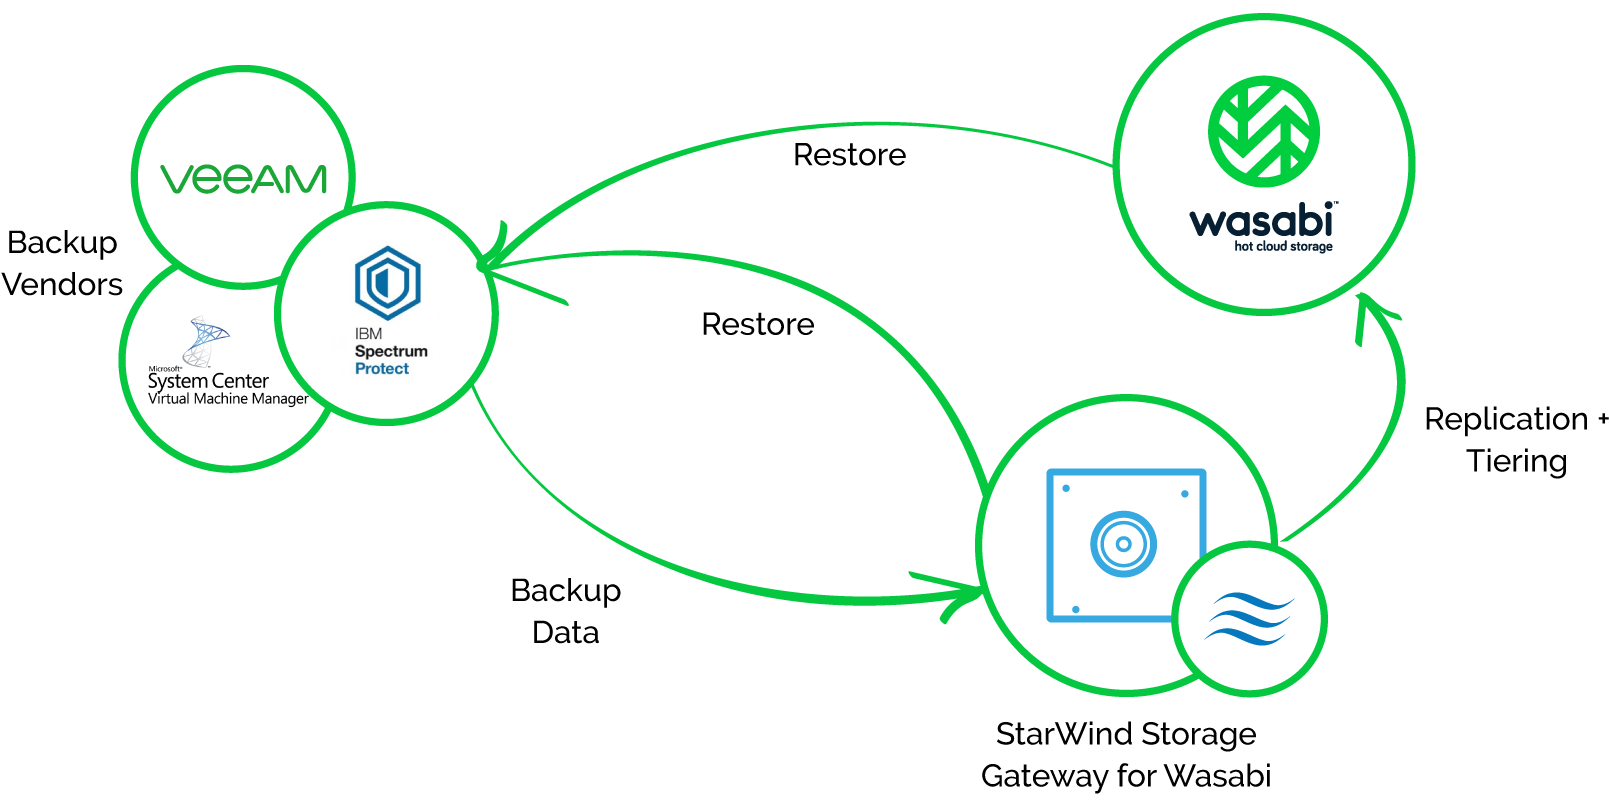 StarWind Storage Gateway for Wasabi - pic 1